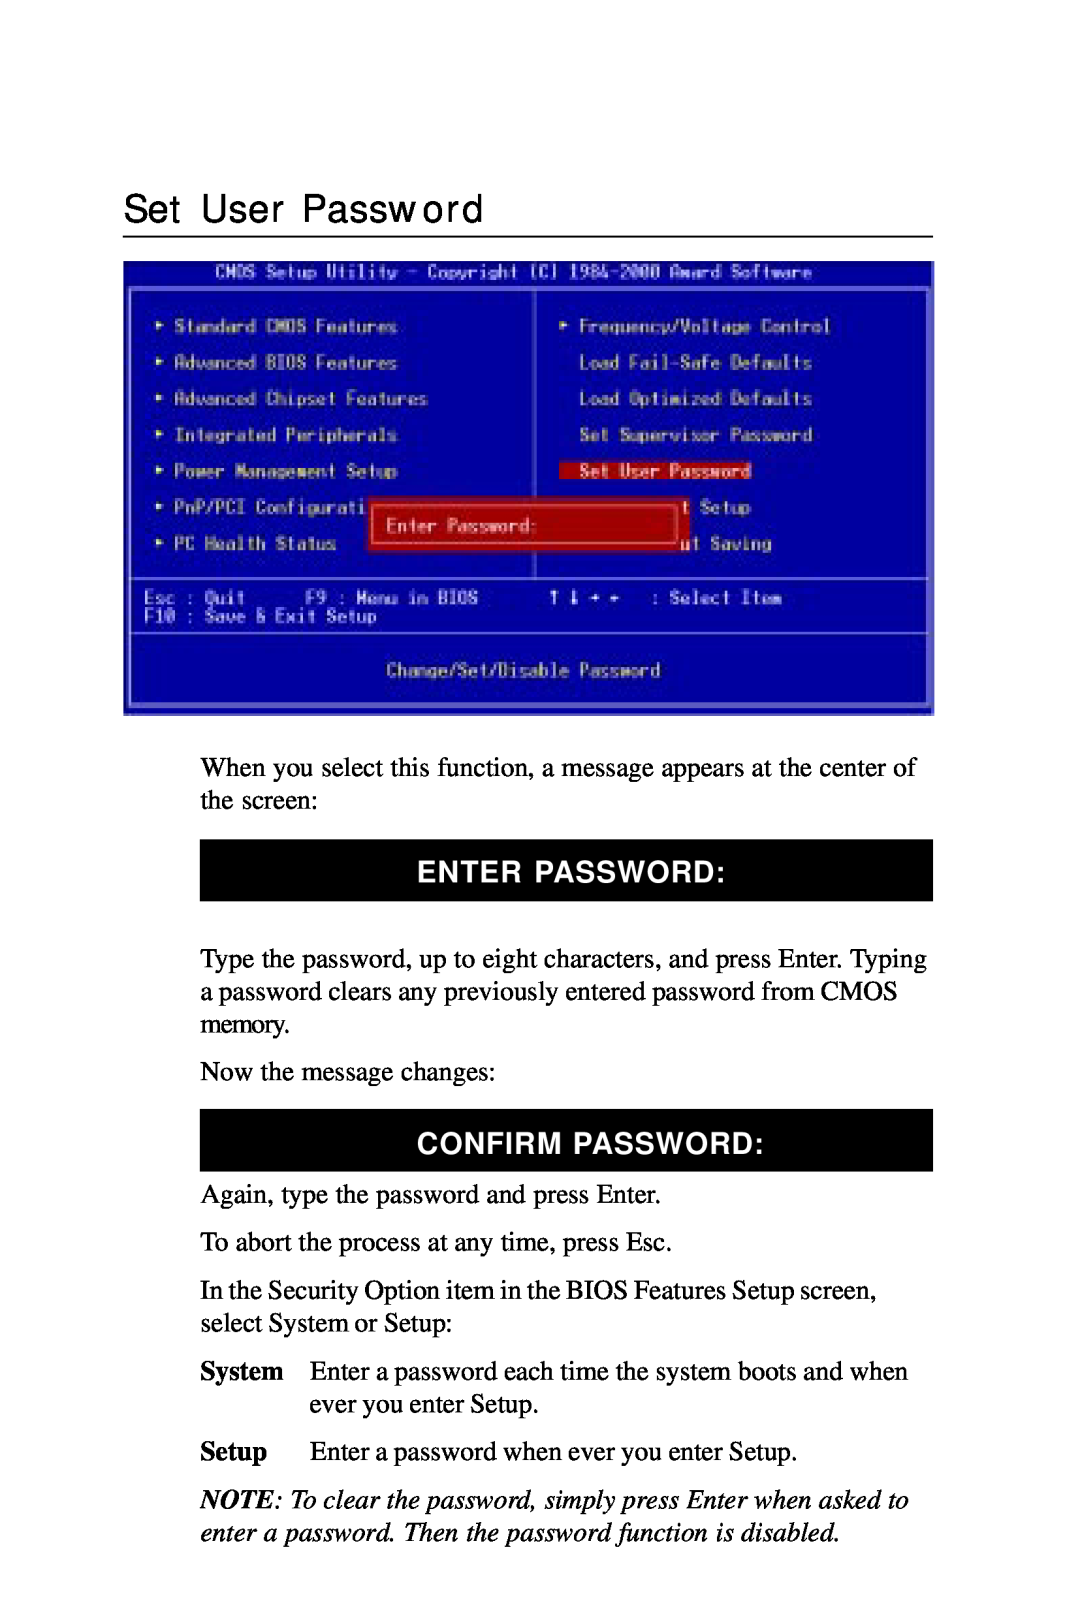 Intel PCM-6896 manual Set User Password, Enter Password, Confirm Password 